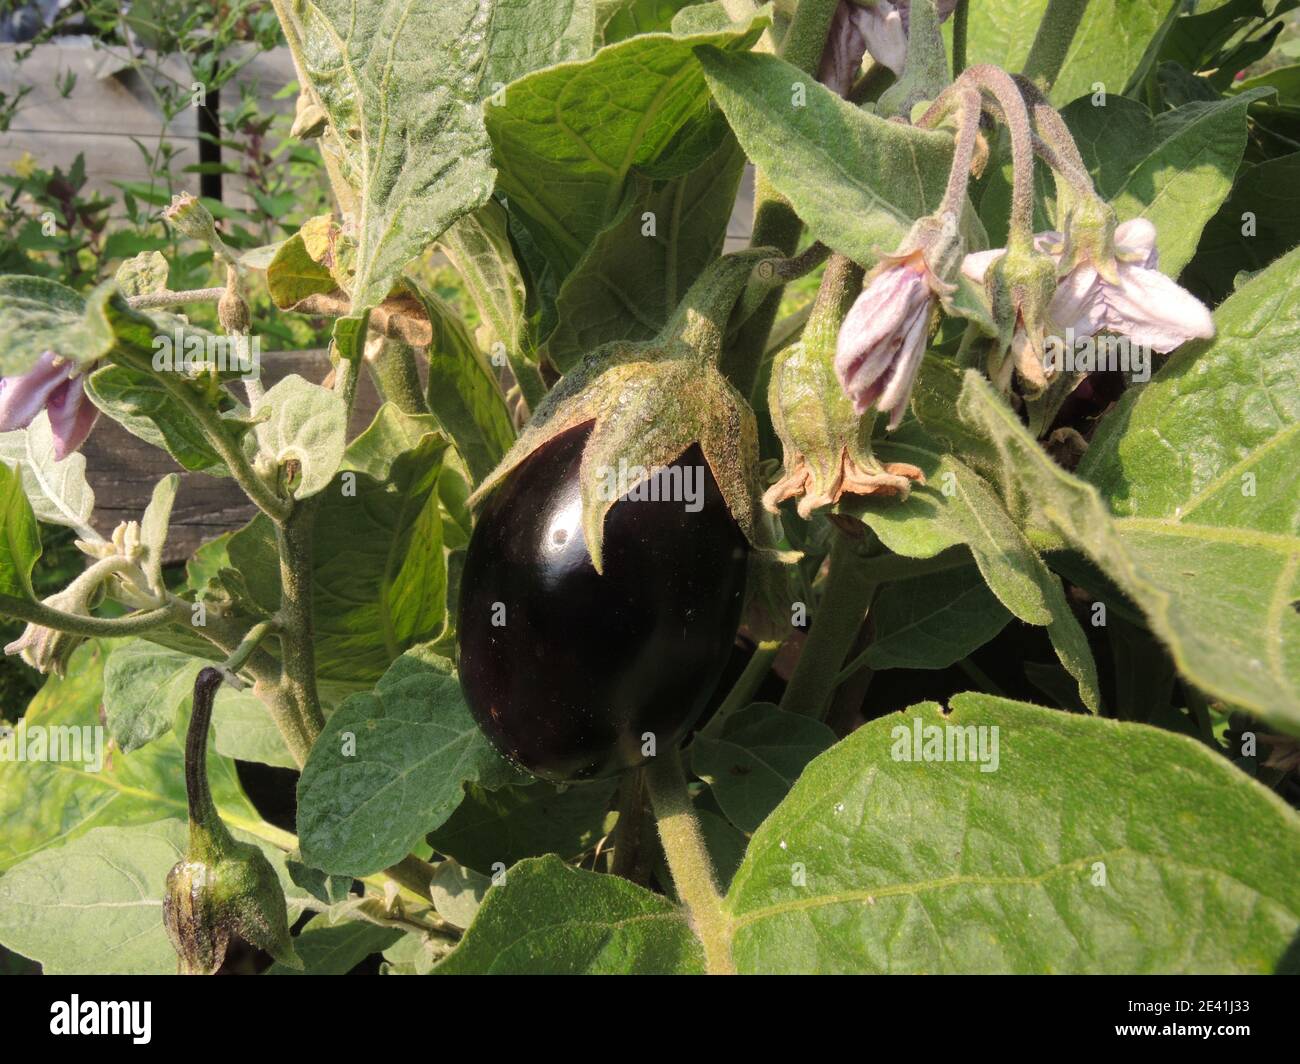 egg-plant, eggplant (Solanum melongena), fruit Stock Photo